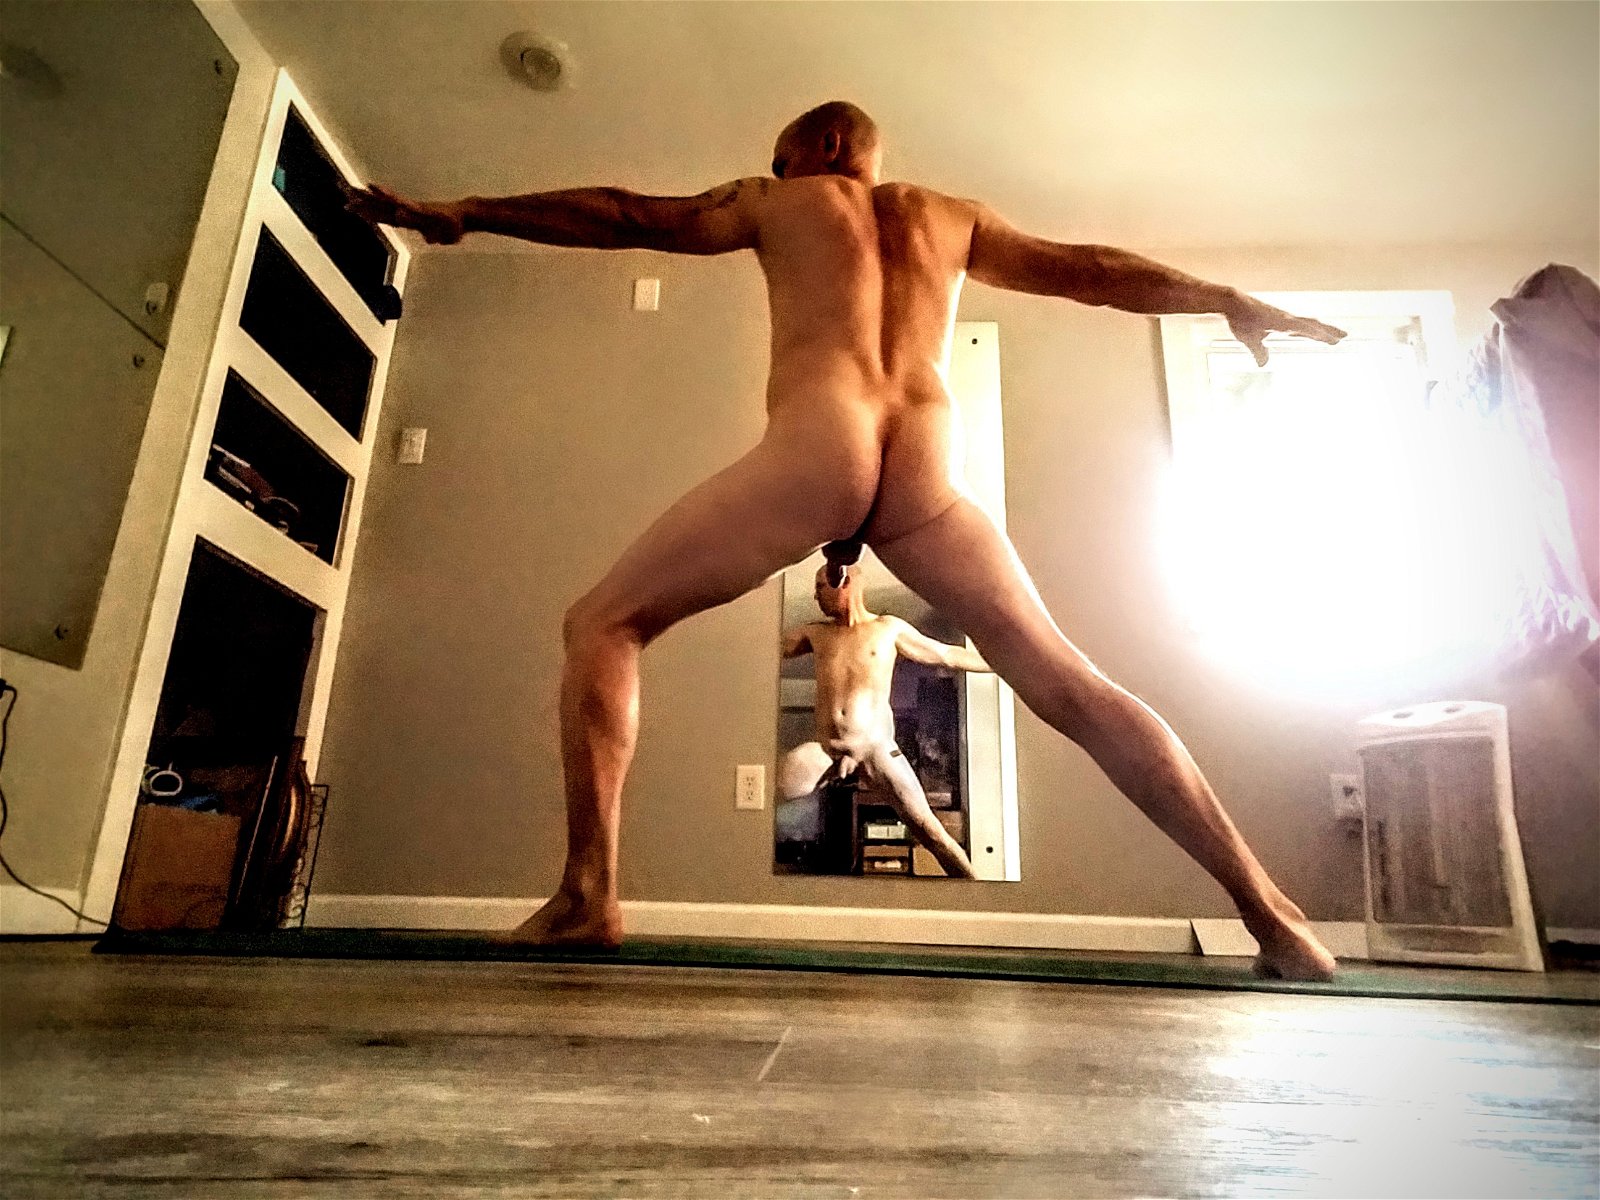 Photo by ArtOfNakedYoga with the username @ArtOfNakedYoga, who is a verified user,  December 12, 2018 at 1:18 PM. The post is about the topic YogaNude and the text says '#yoga #me #nudeyoga #nakedyoga #warrior II'